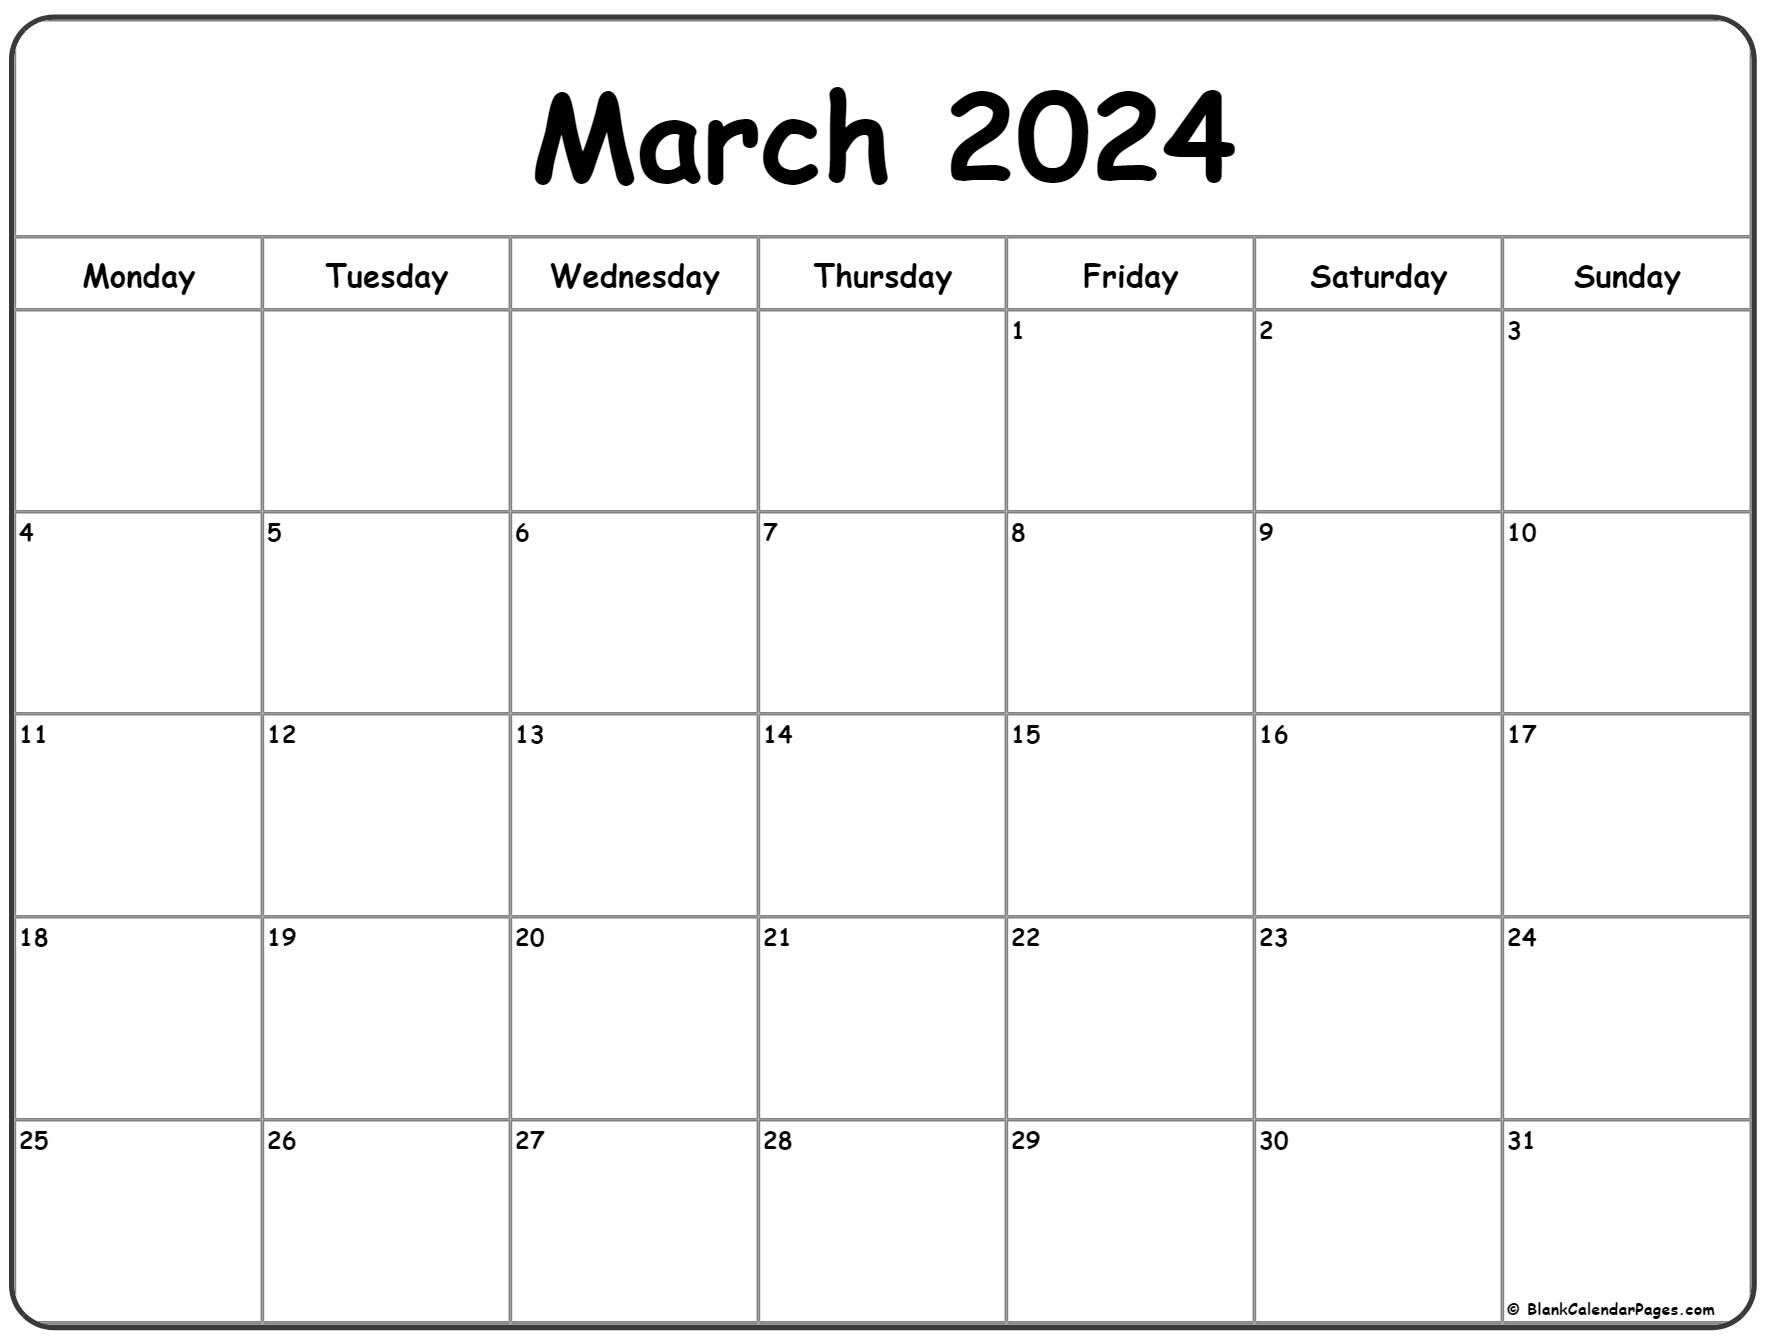 March 2024 Monday Calendar | Monday To Sunday for Blank Printable March 2024 Calendar